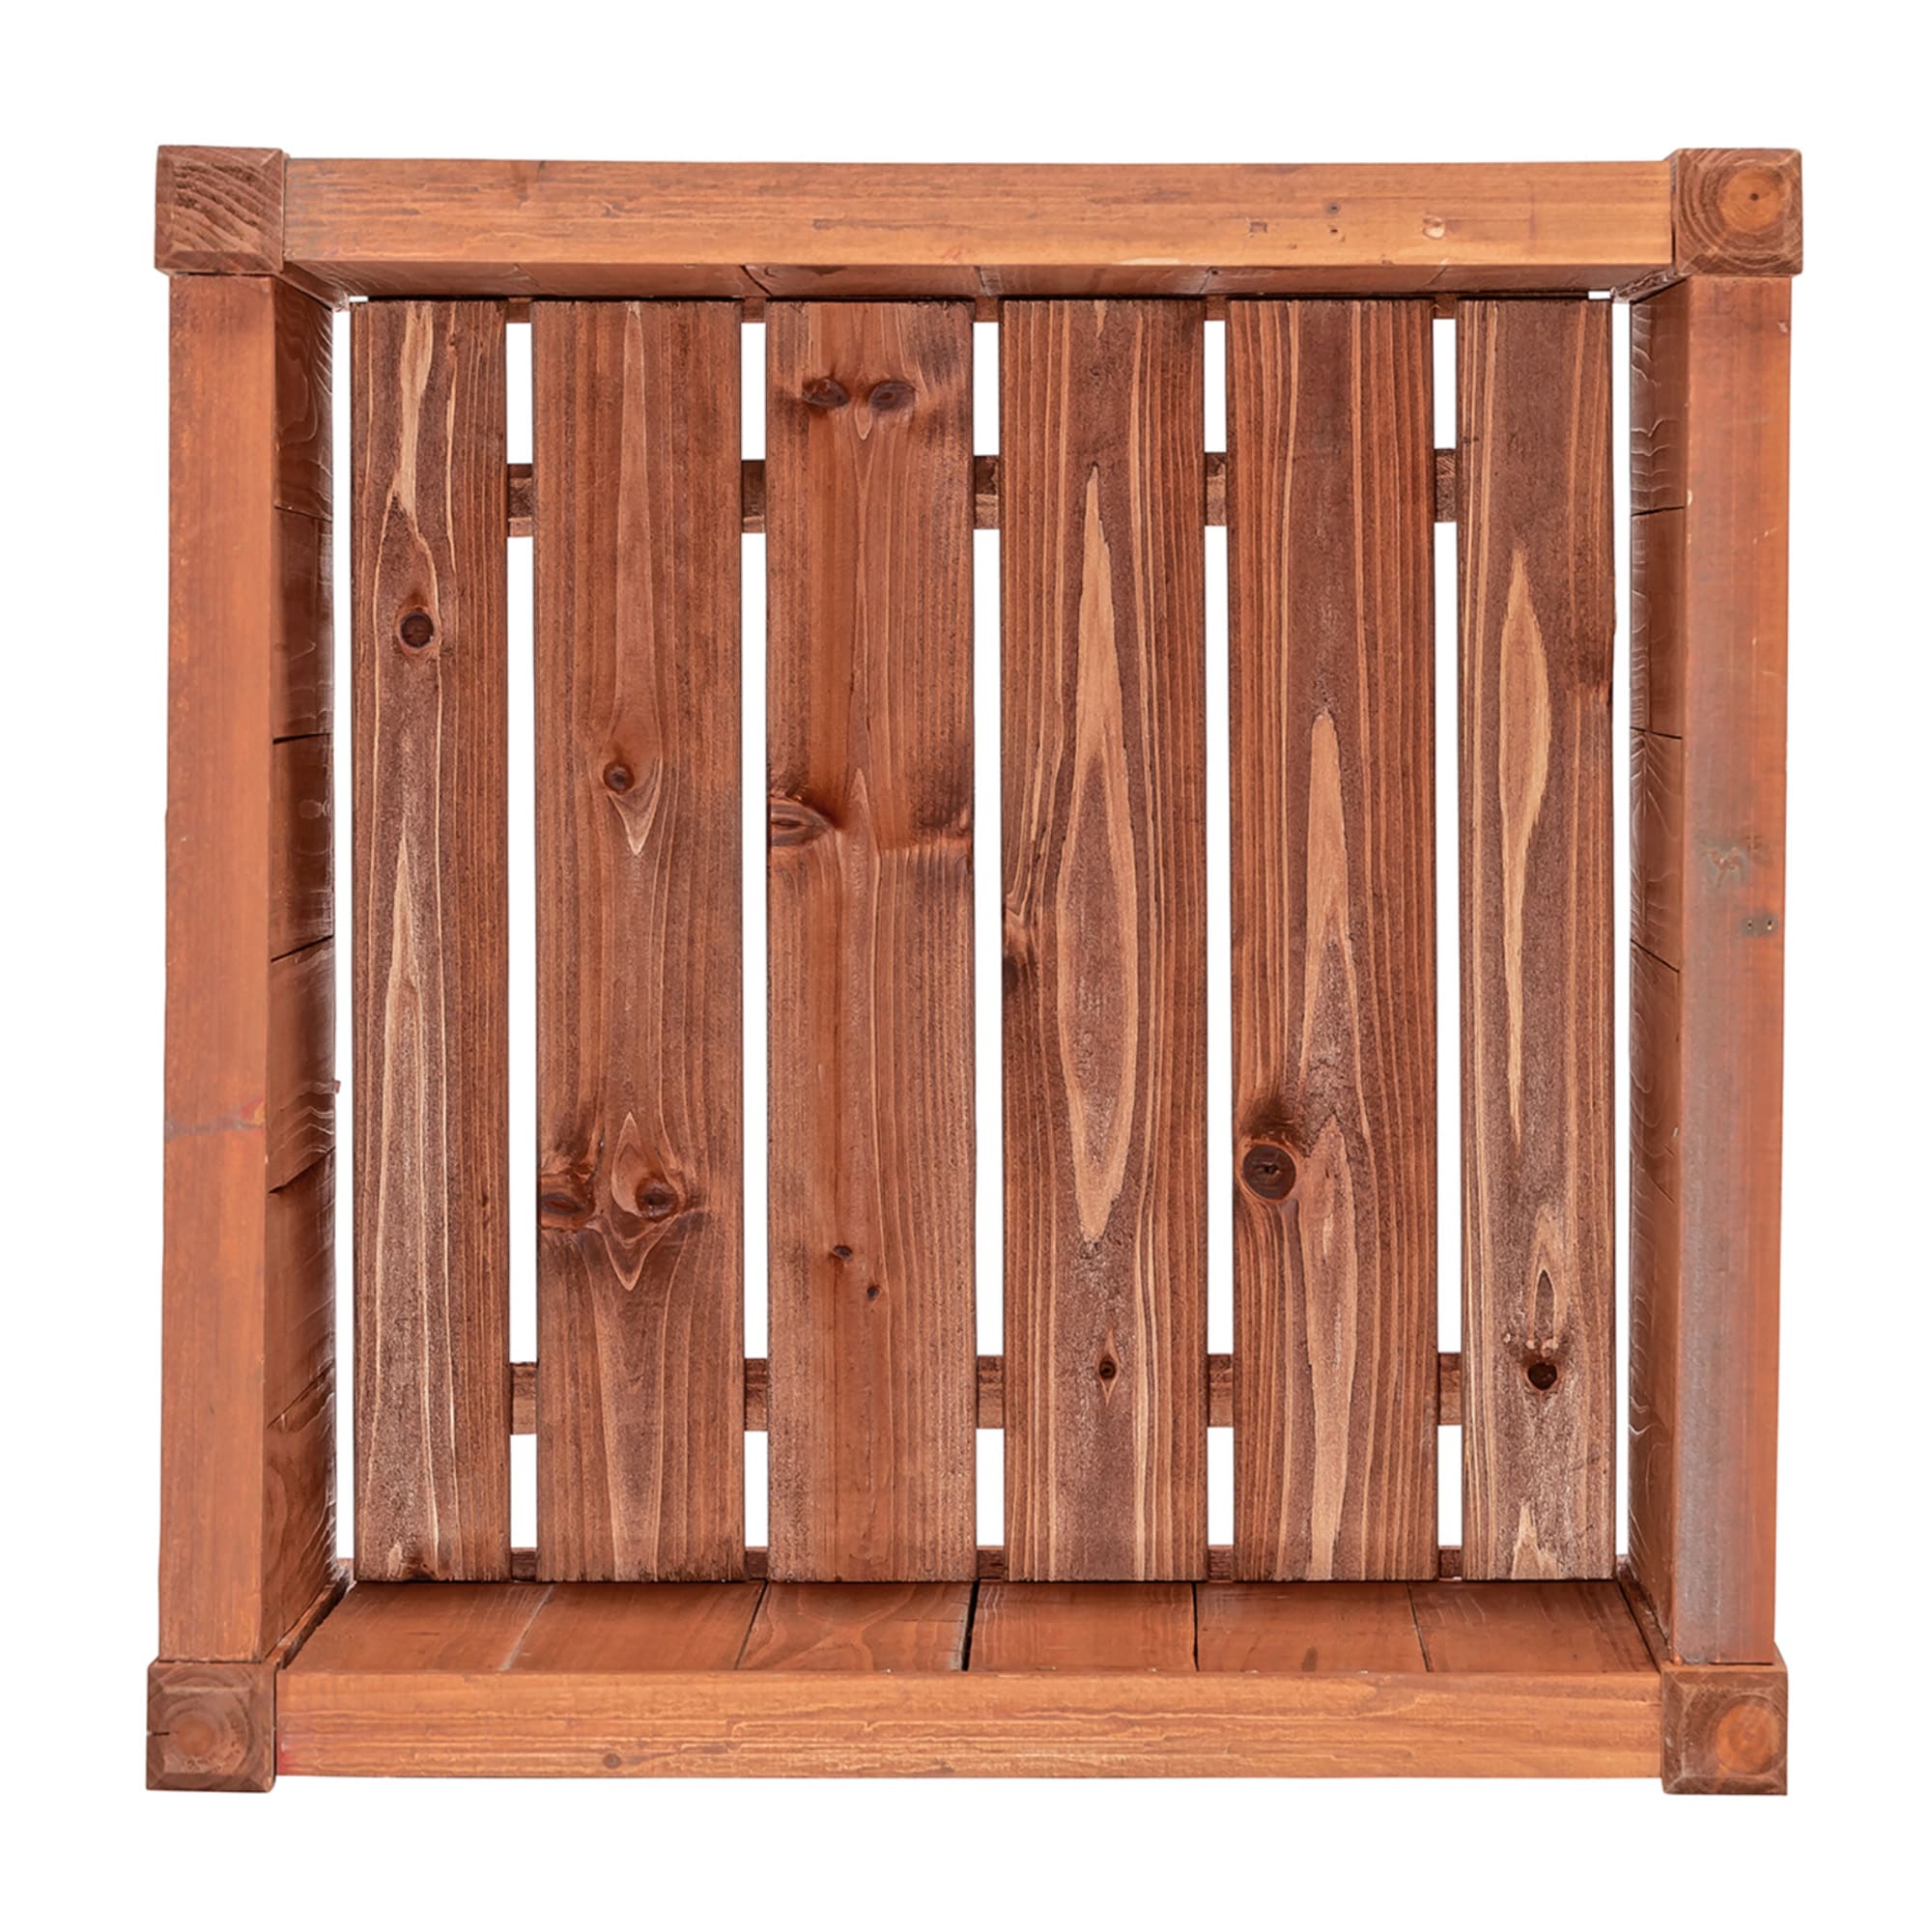 18 x 6 Wood Rustic Rectangular Planter Box Holders